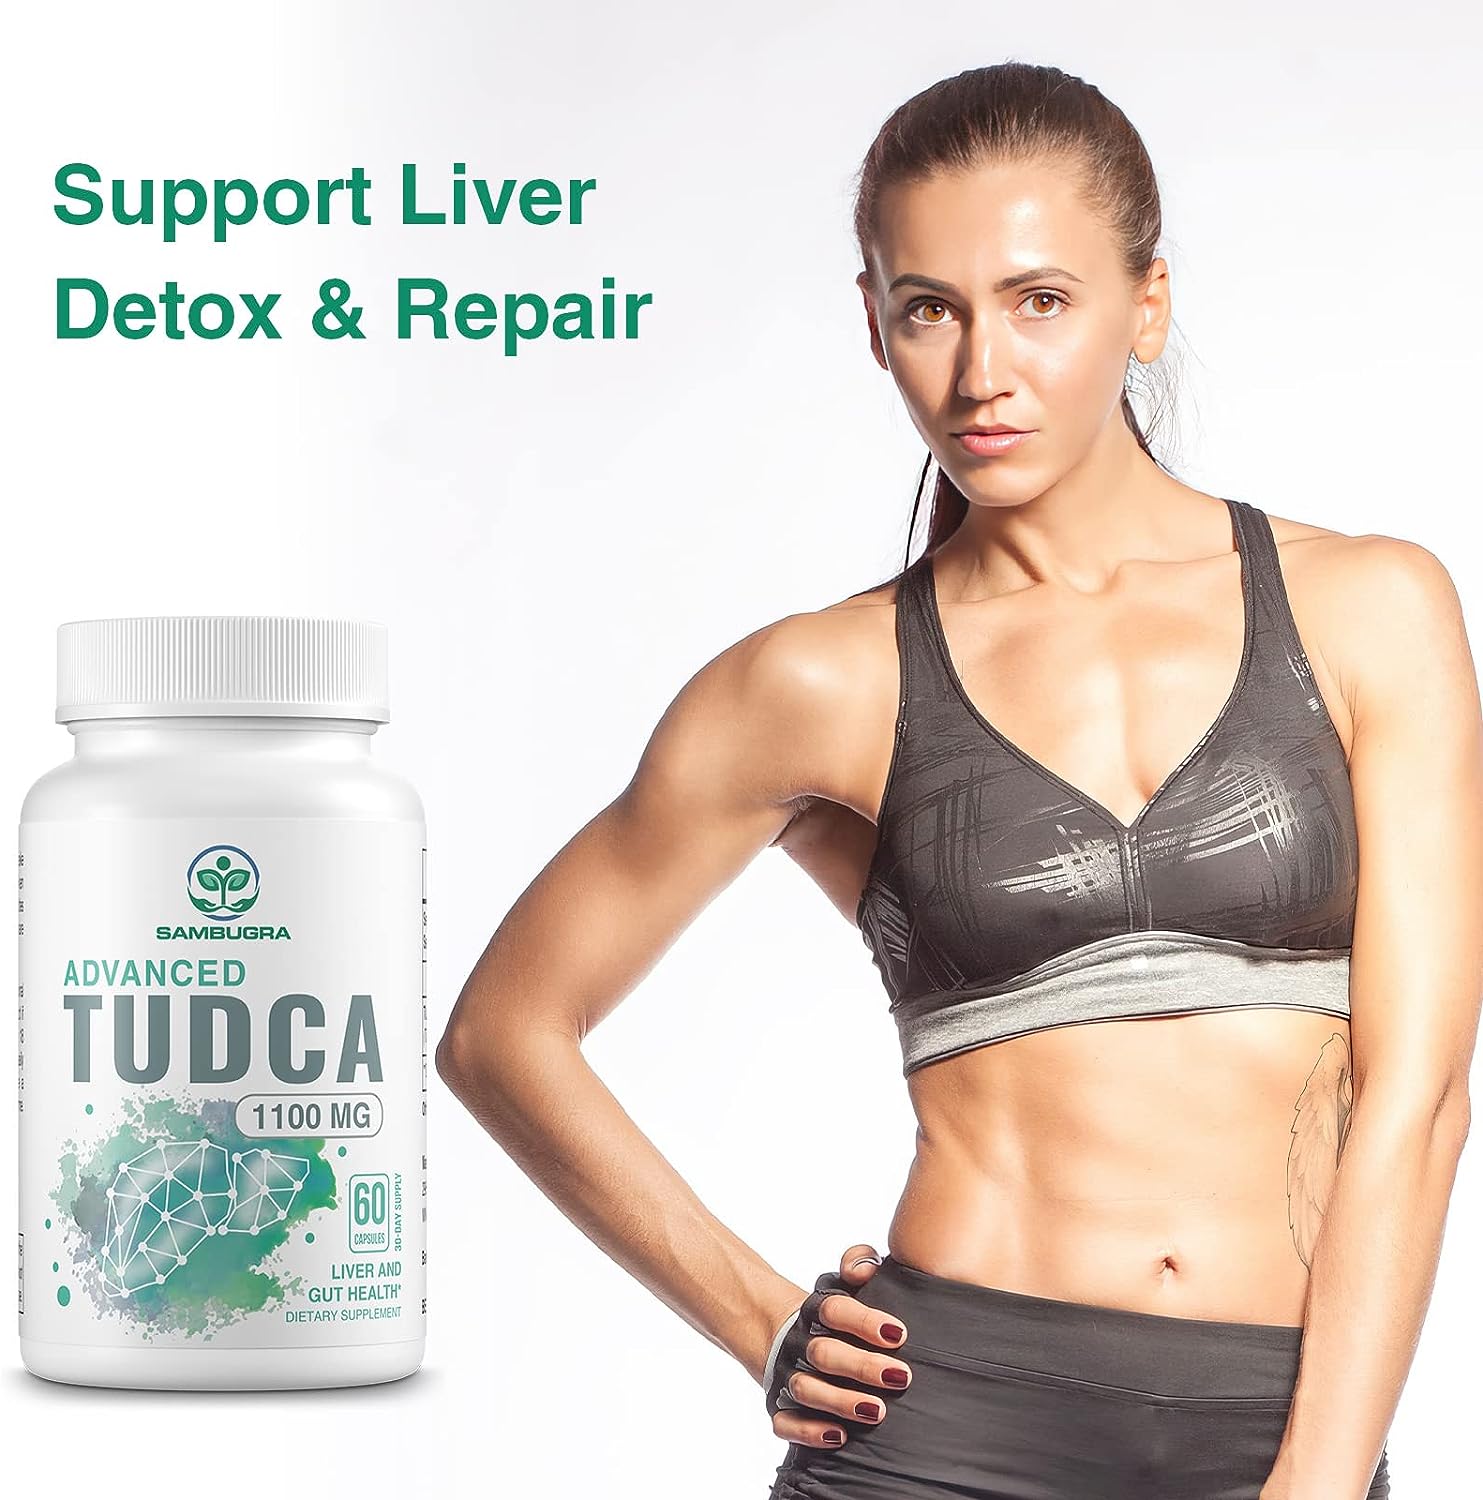 TUDCA Liver Supplements 1100mg, Ultra Strength Bile Salt TUDCA Supplement, Liver Support for Liver Cleanse Detox and Repair, 60 Capsules : Health & Household